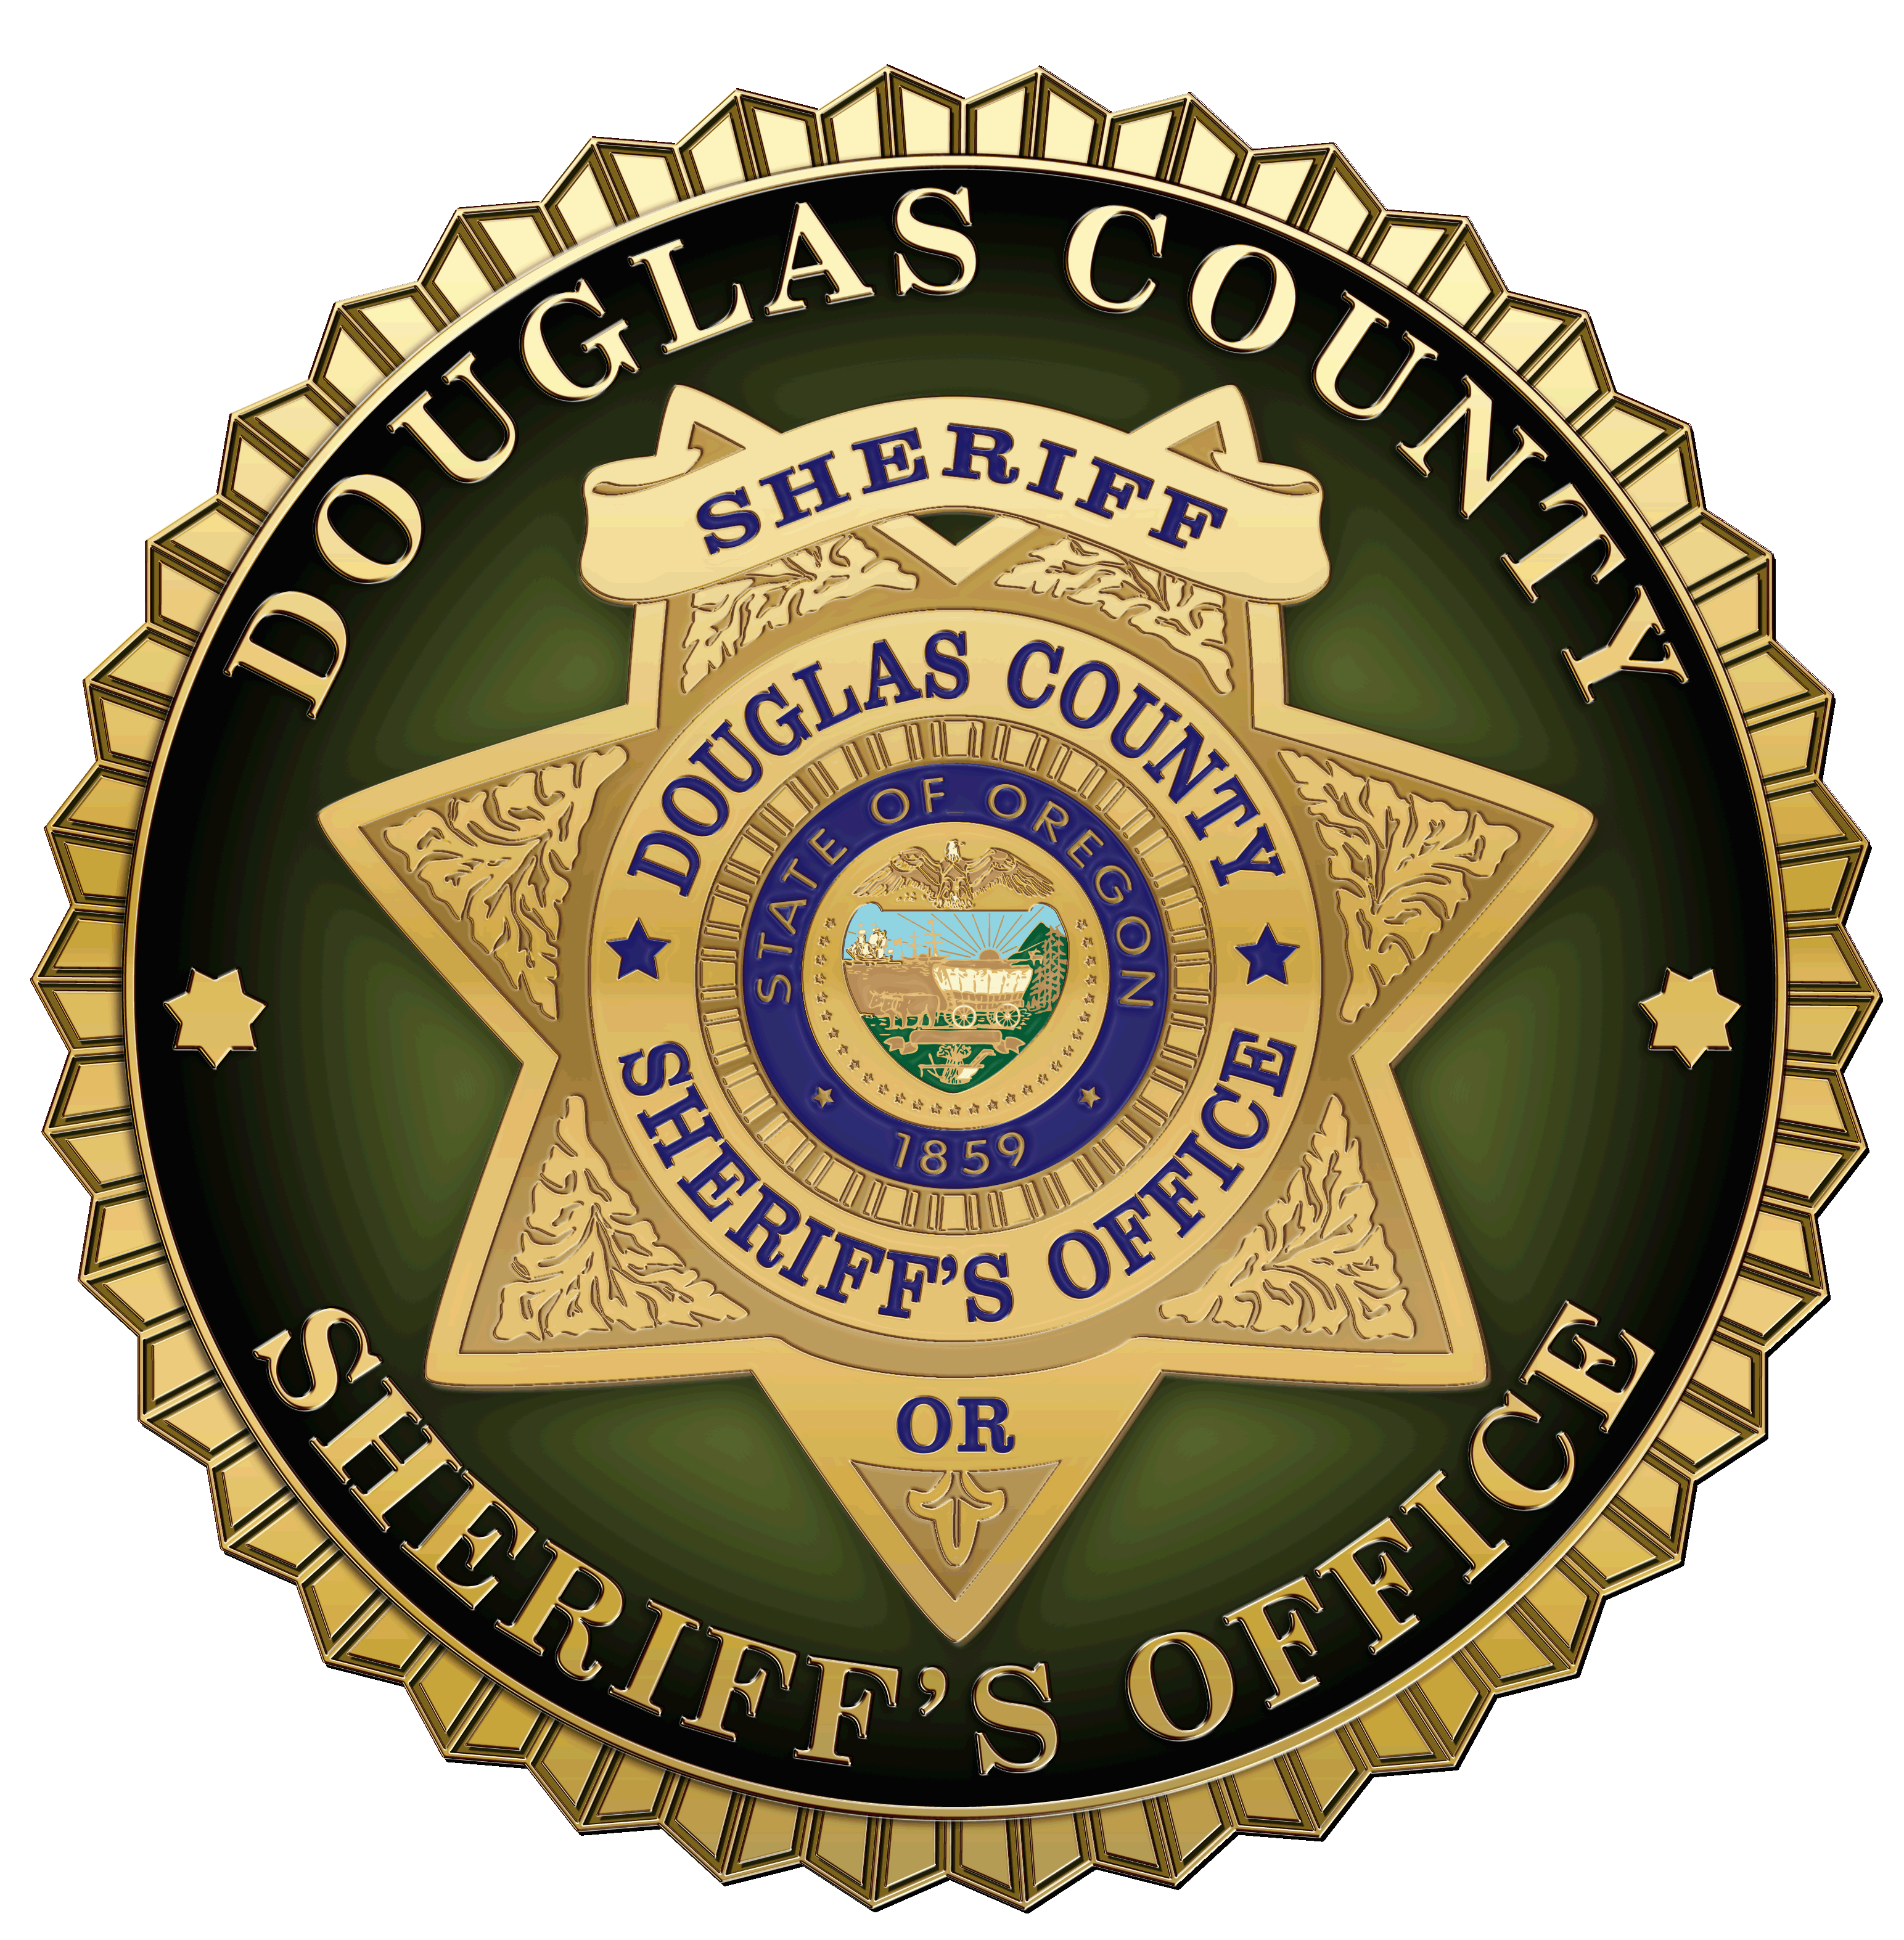 Douglas county Sheriff office